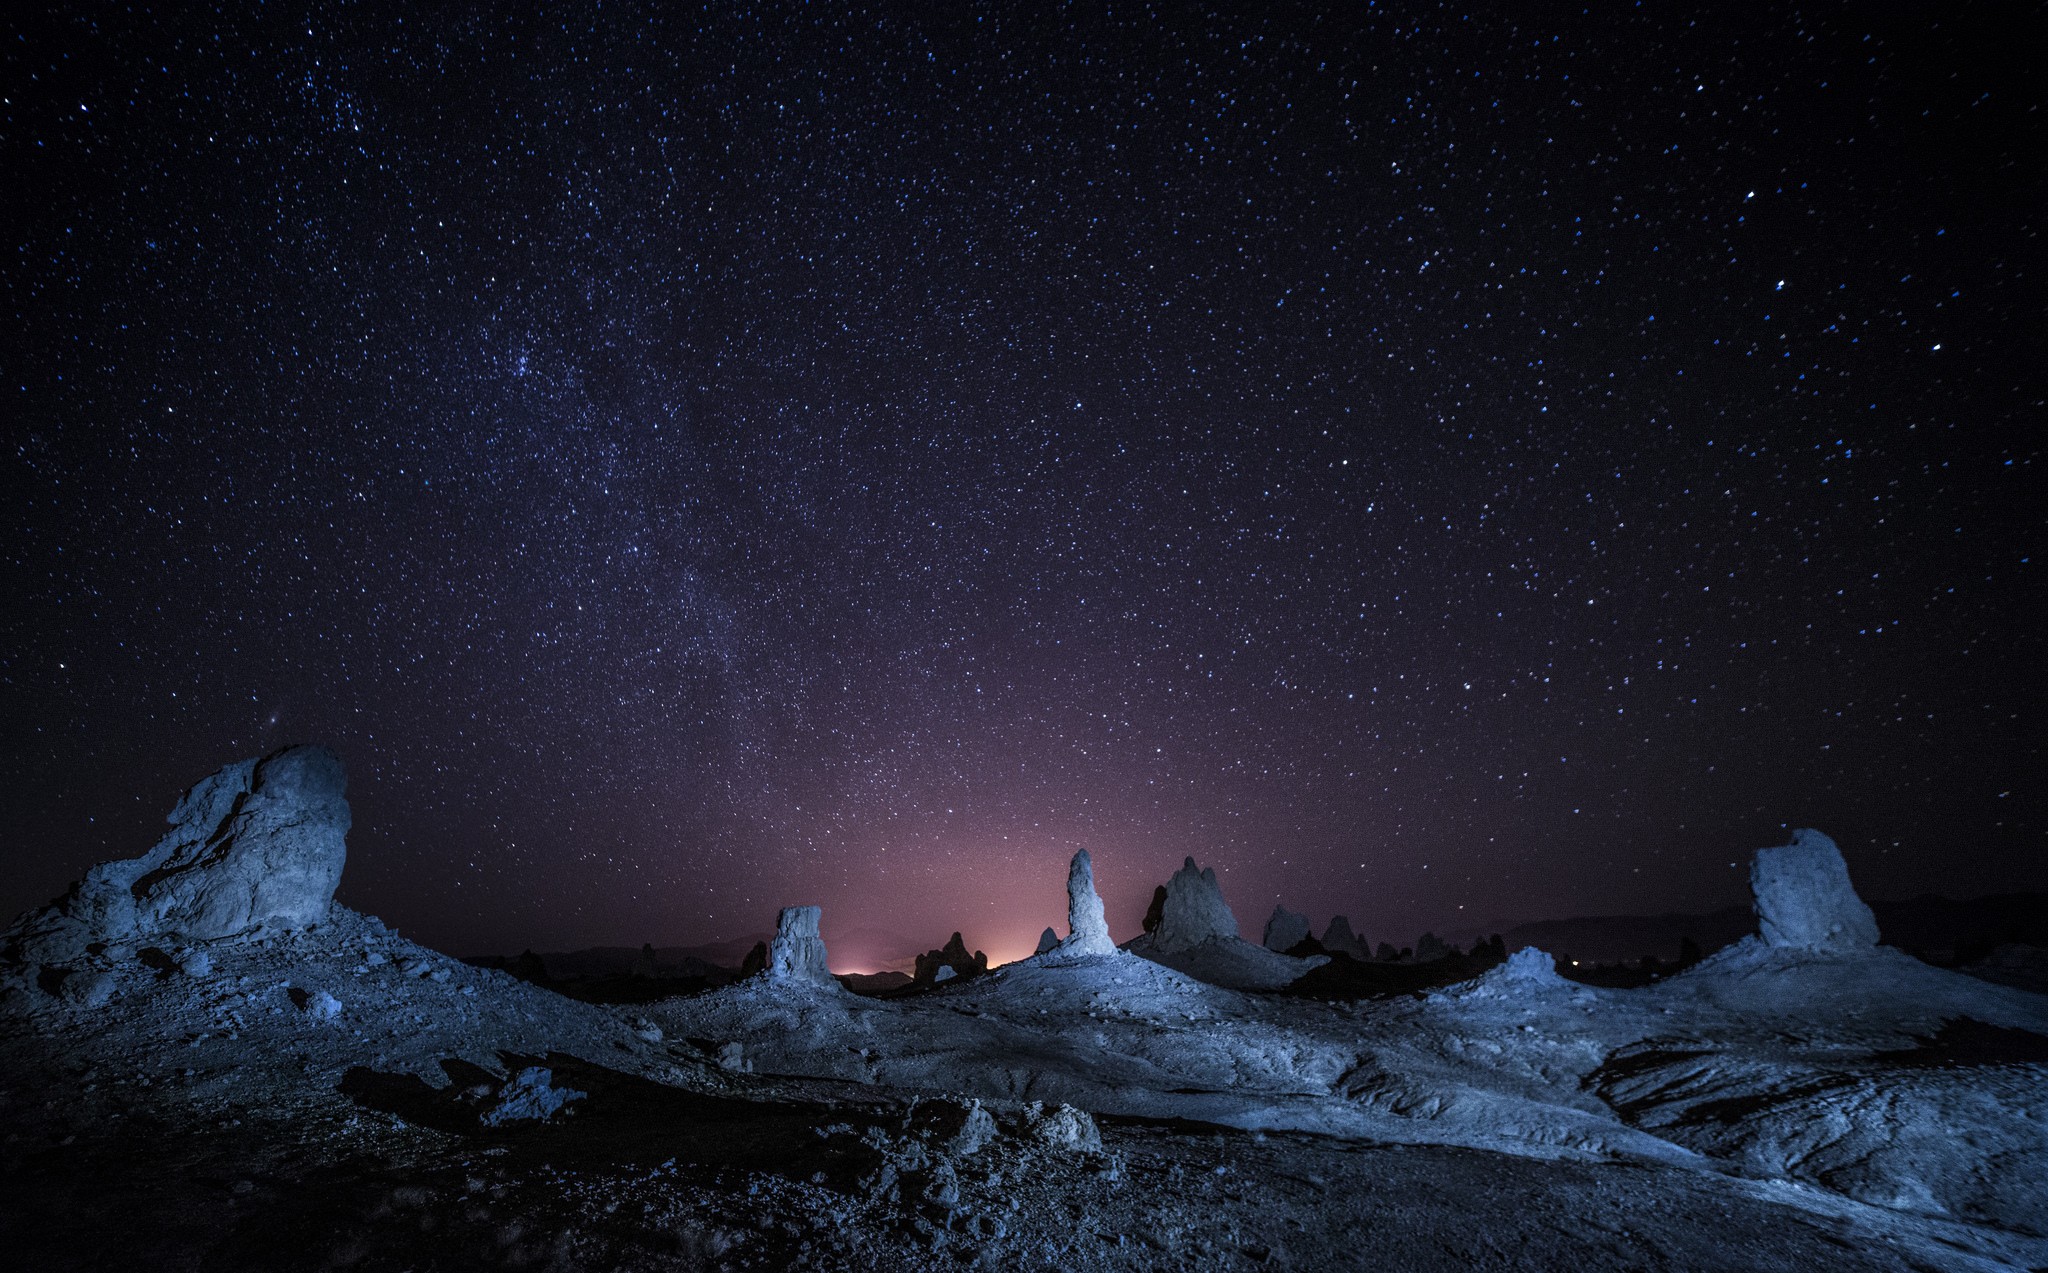 General 2048x1273 stars night landscape starred sky nature sky